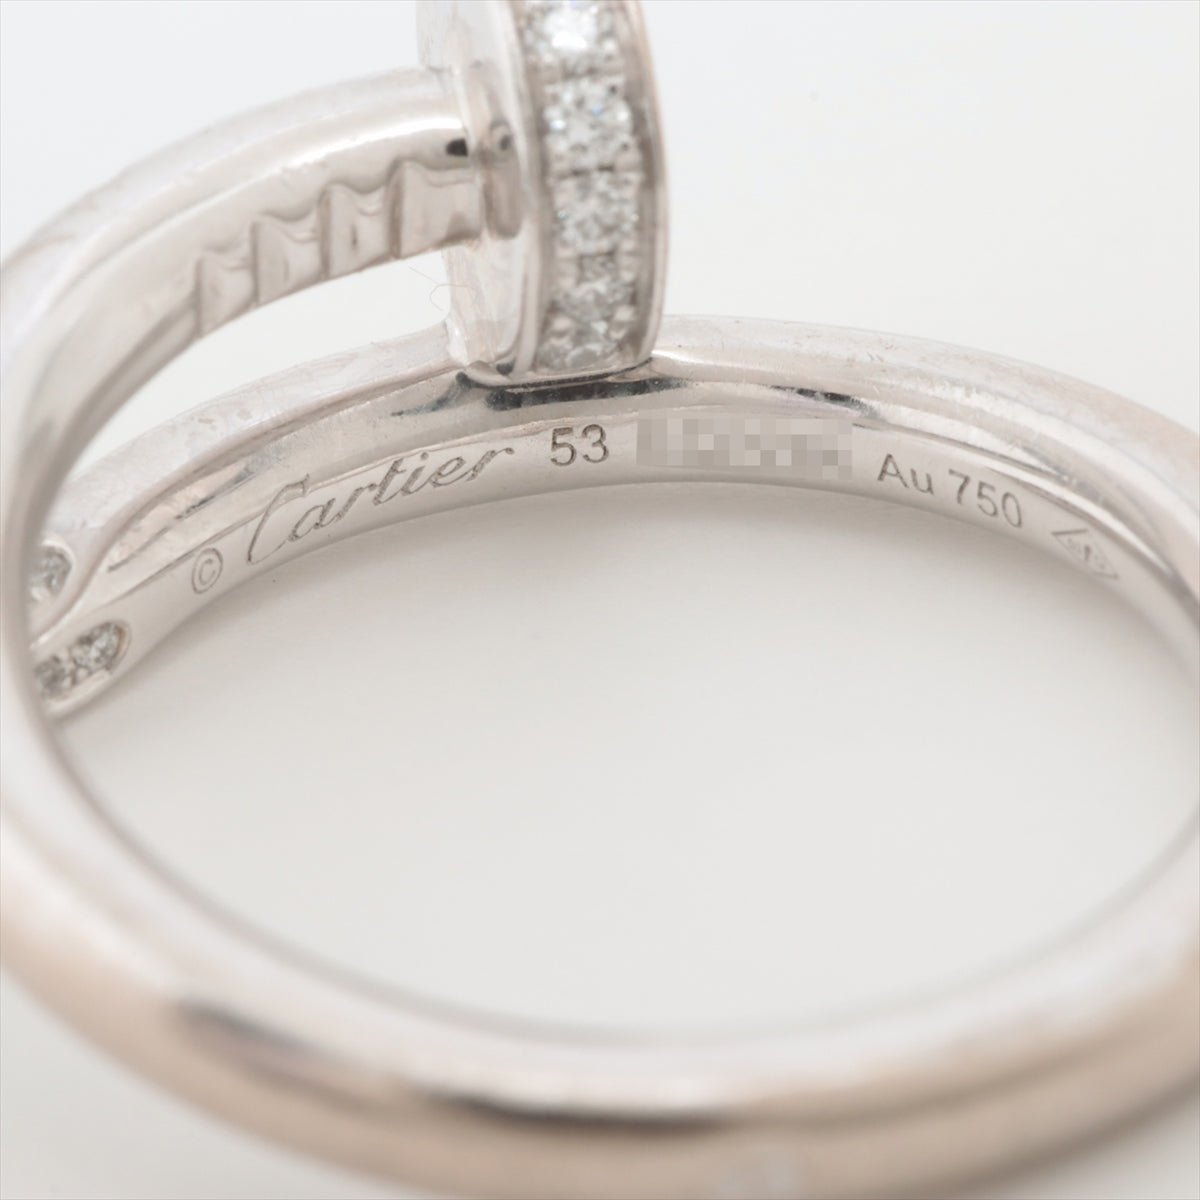 Cartier Juste un Clou Diamond Ring 750(WG) 8.0g 53